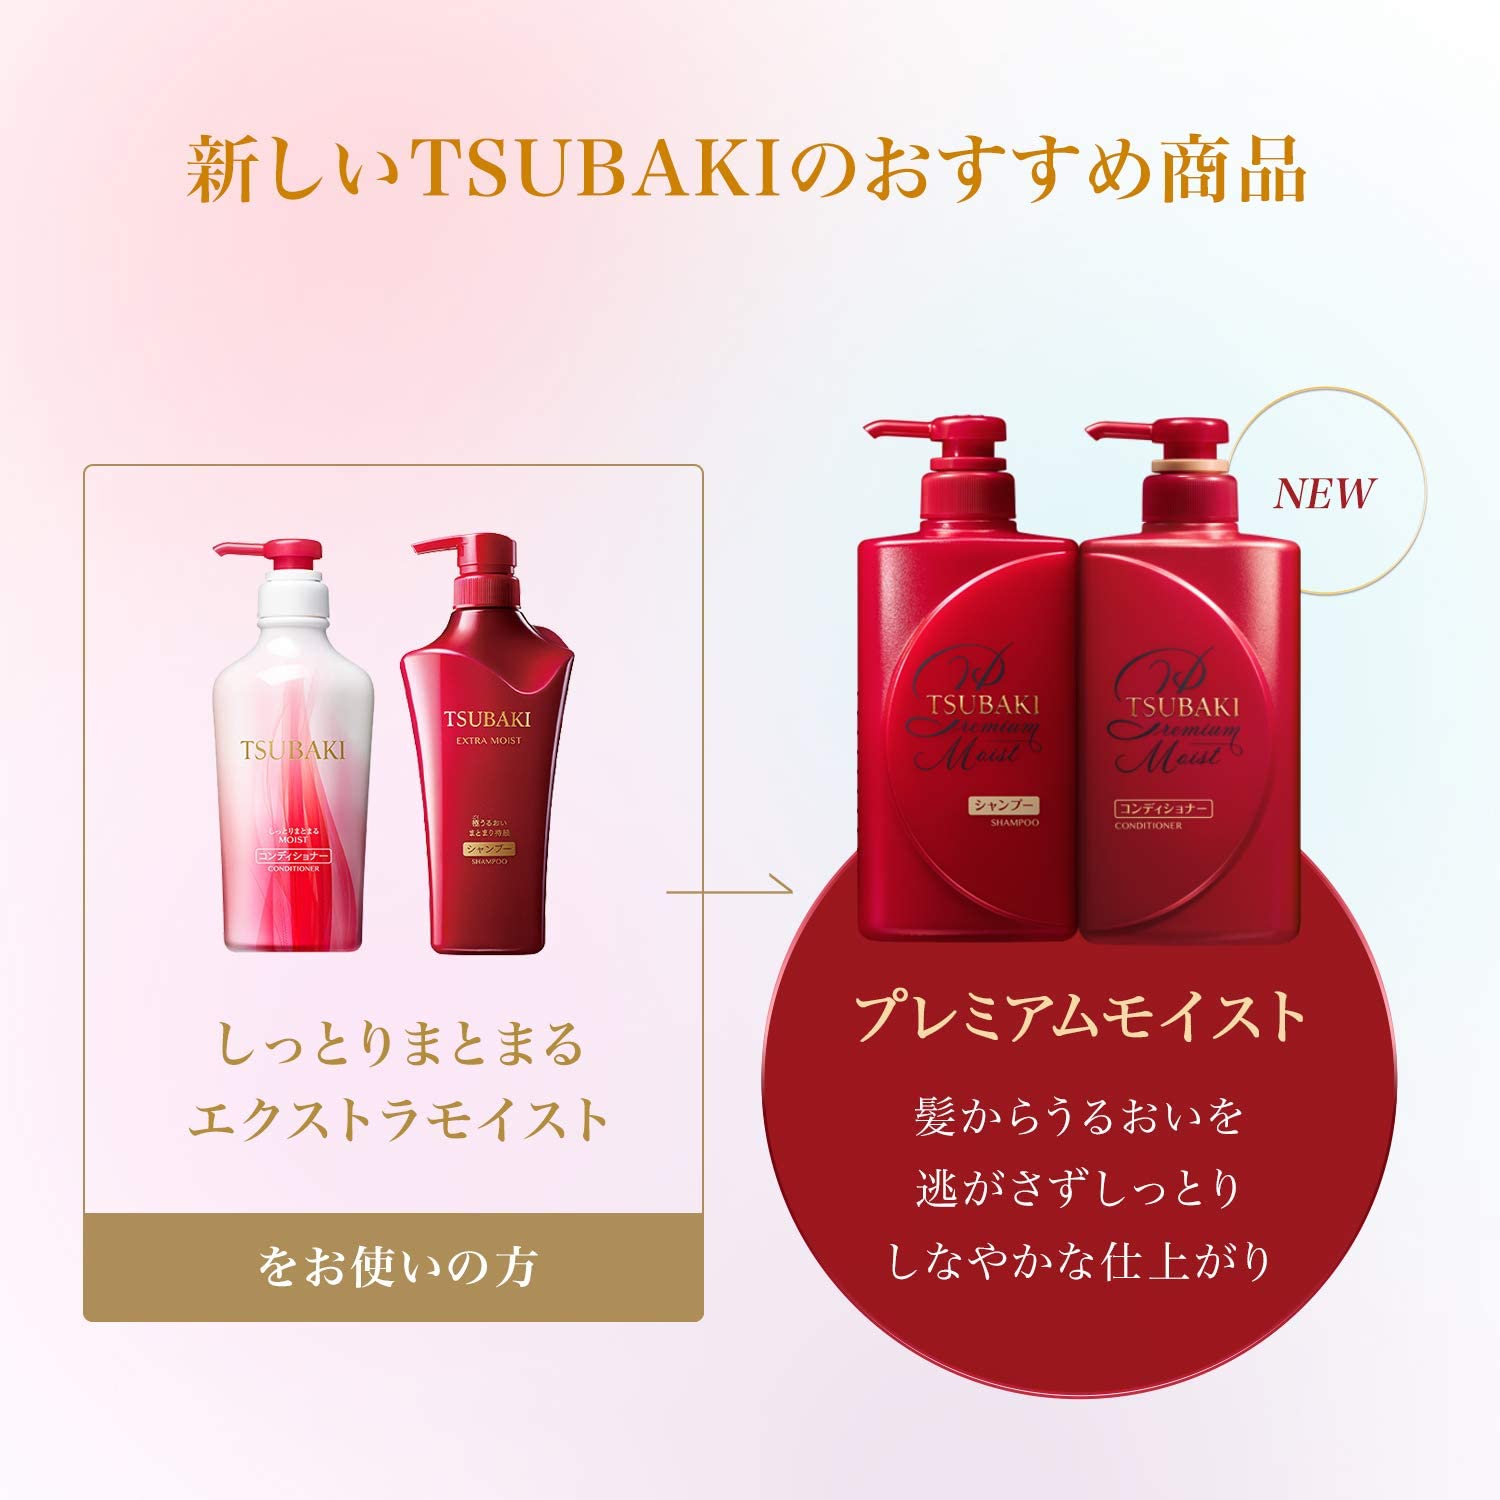 Shiseido Tsubaki Premium Moist Shampoo and Conditioner Beauty Shiseido   